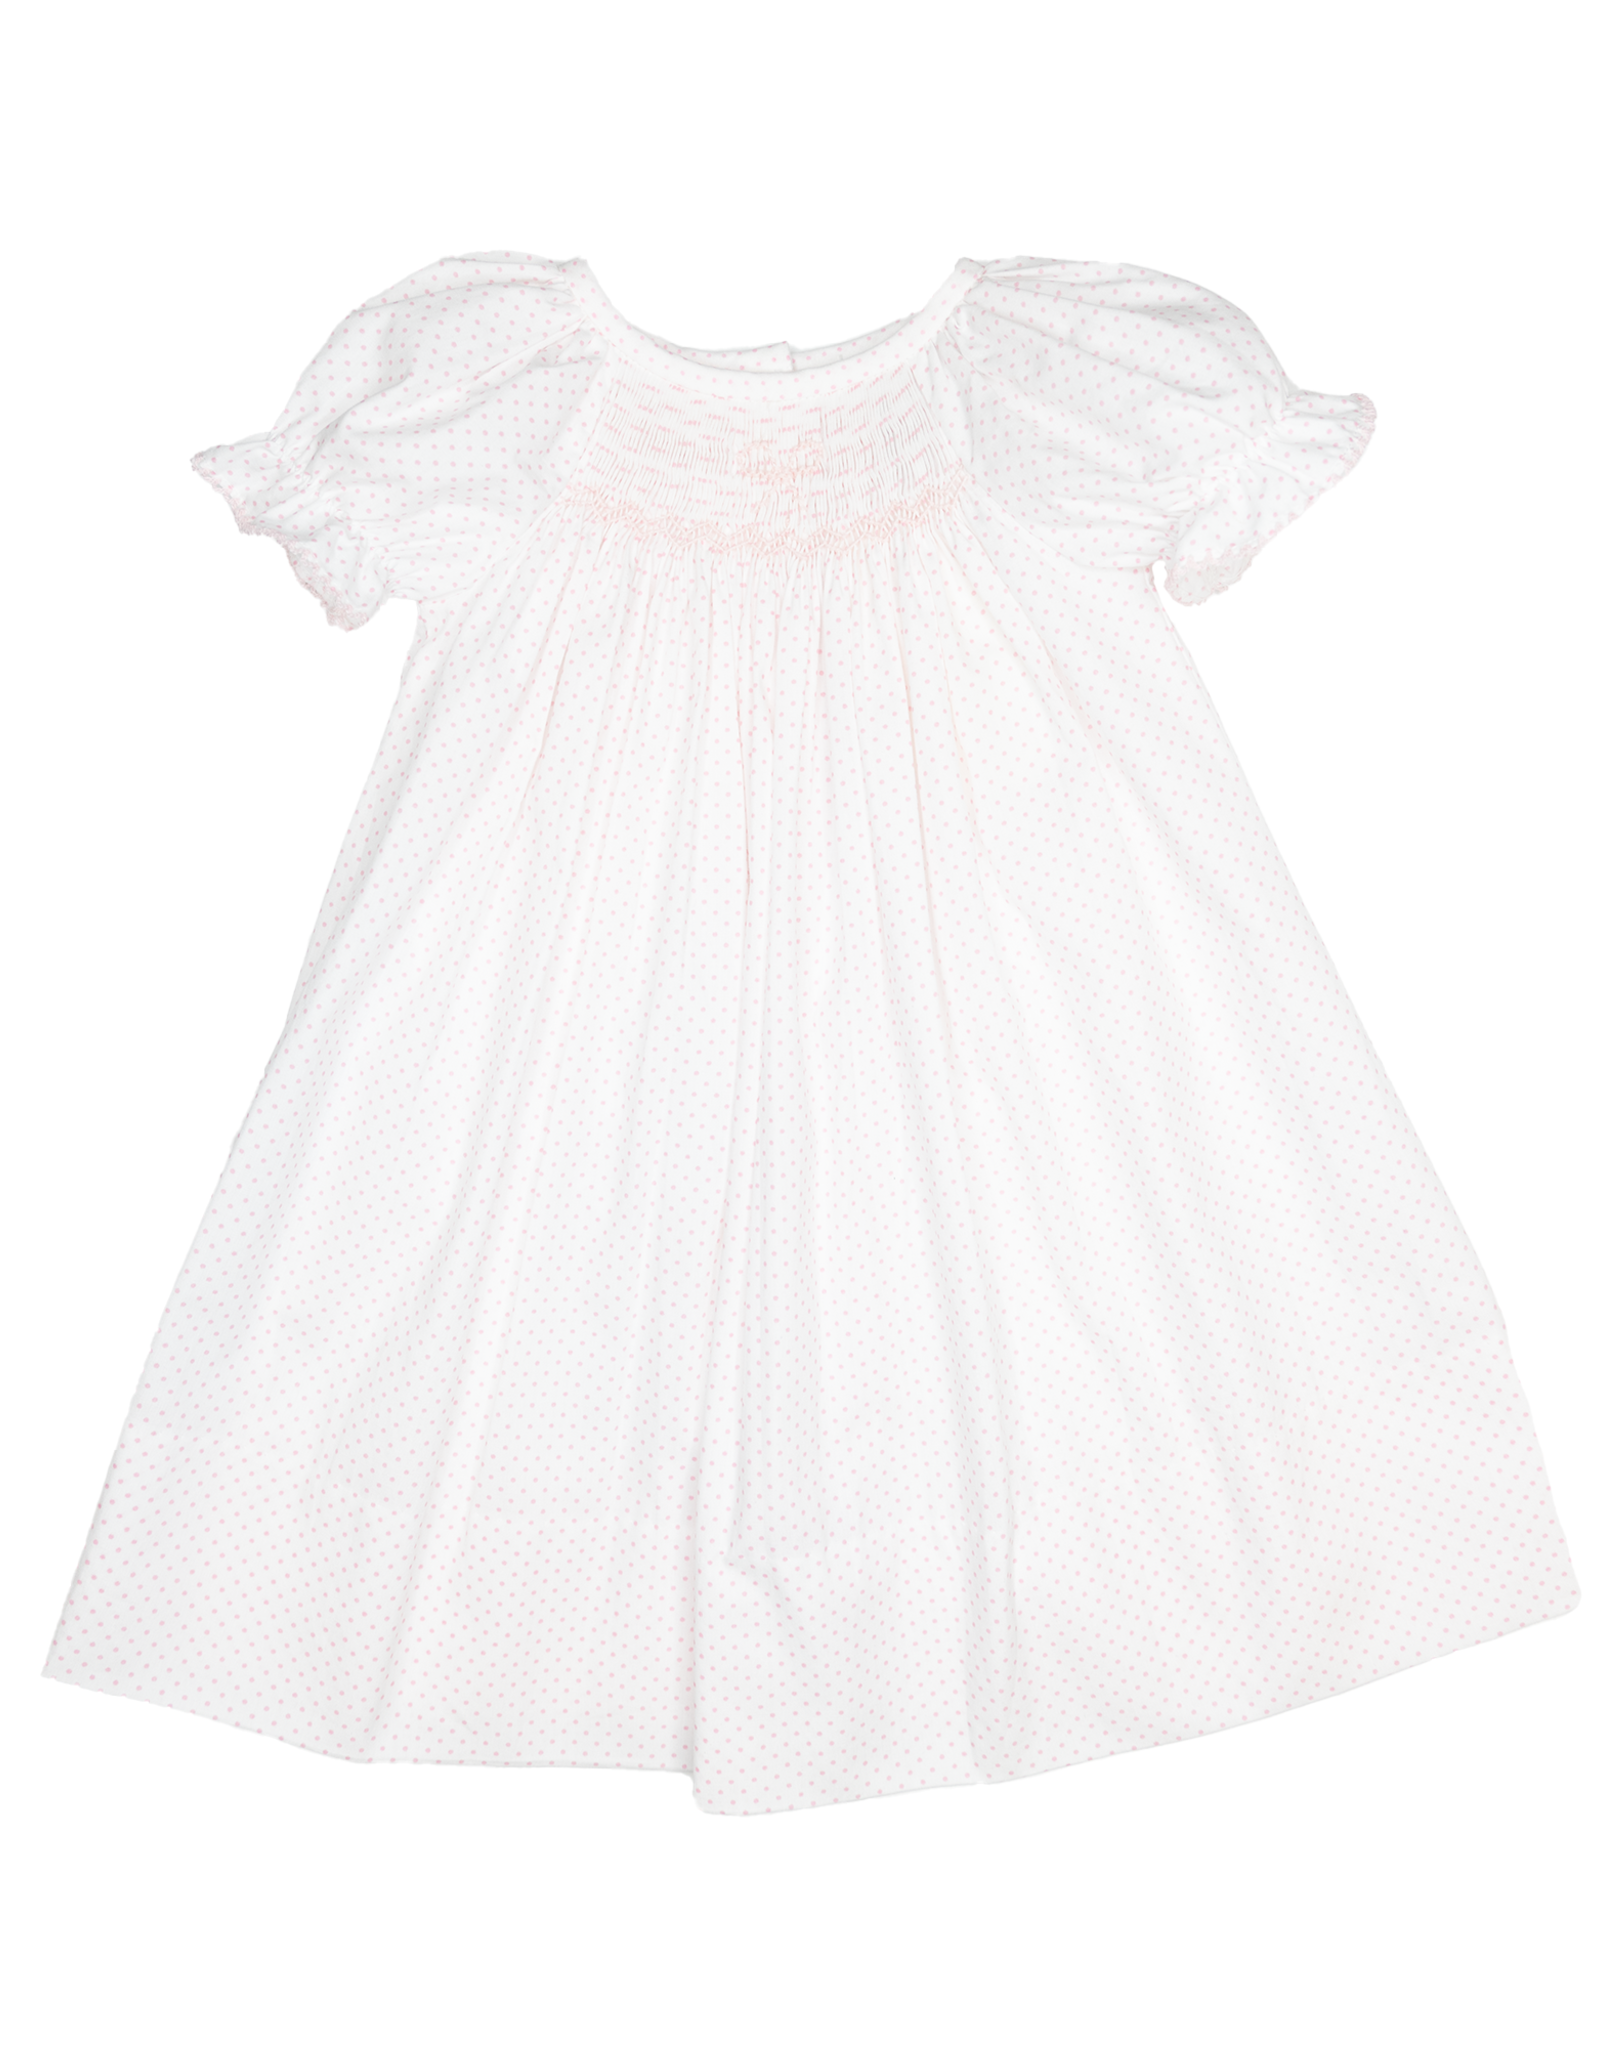 Delaney L9 White/Pink Dot Smocked Bow Gown Newborn